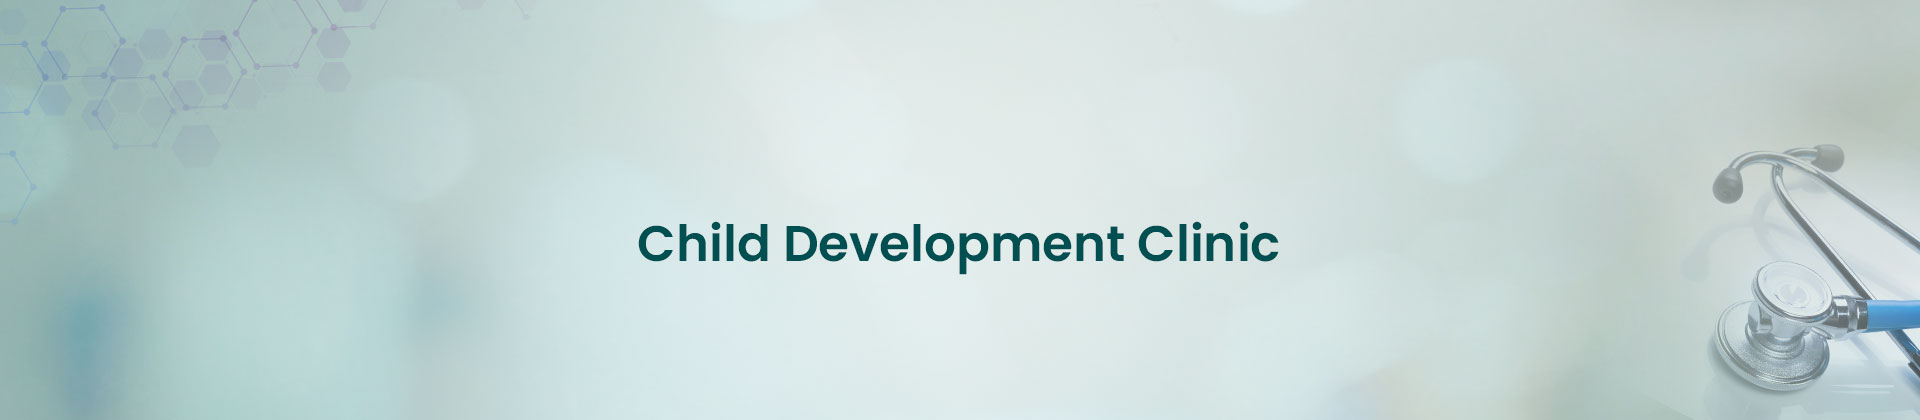 Child Development Clinic